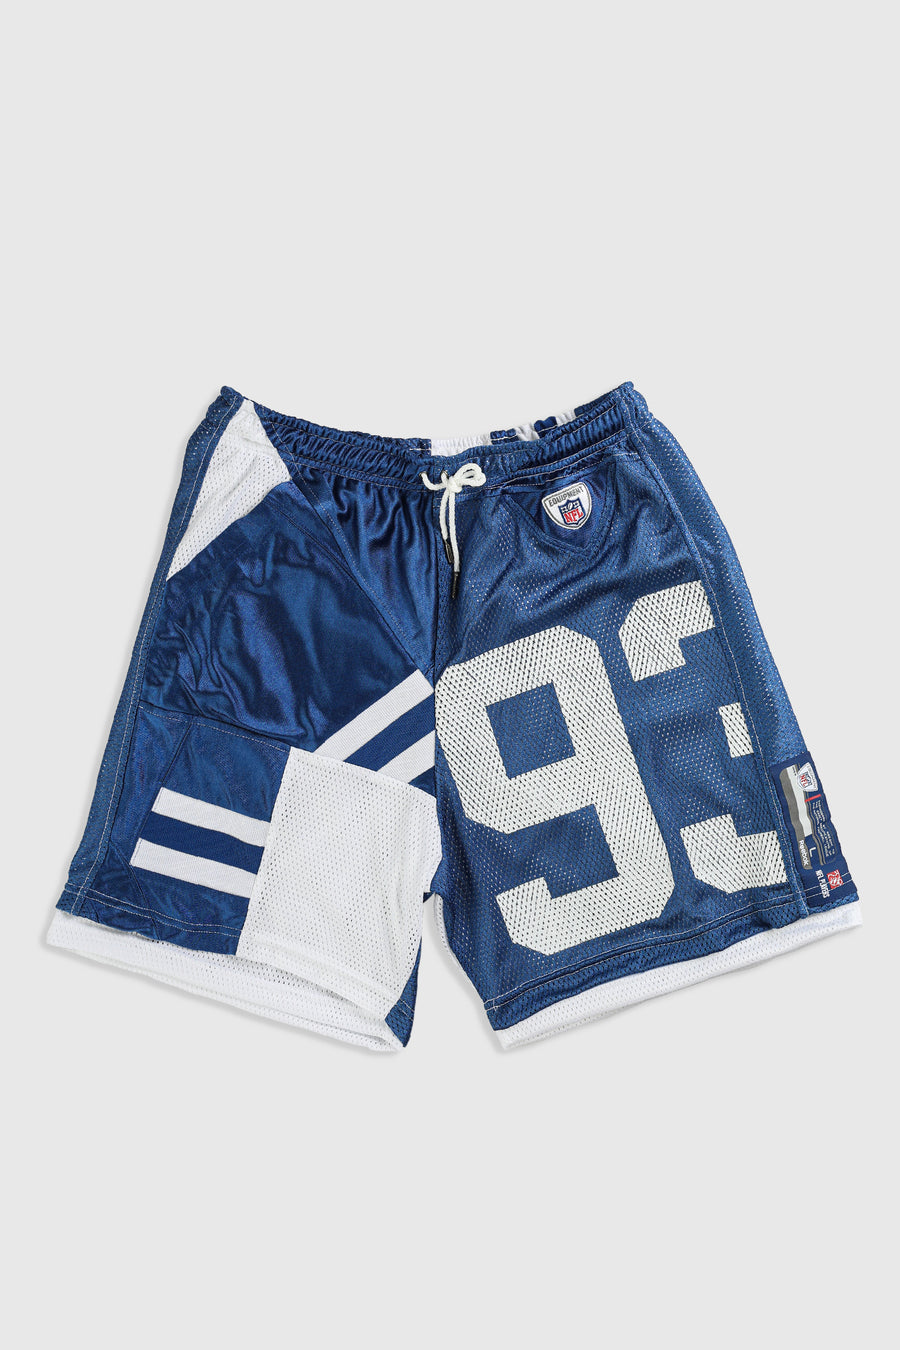 Unisex Rework Colts Jersey Shorts - L